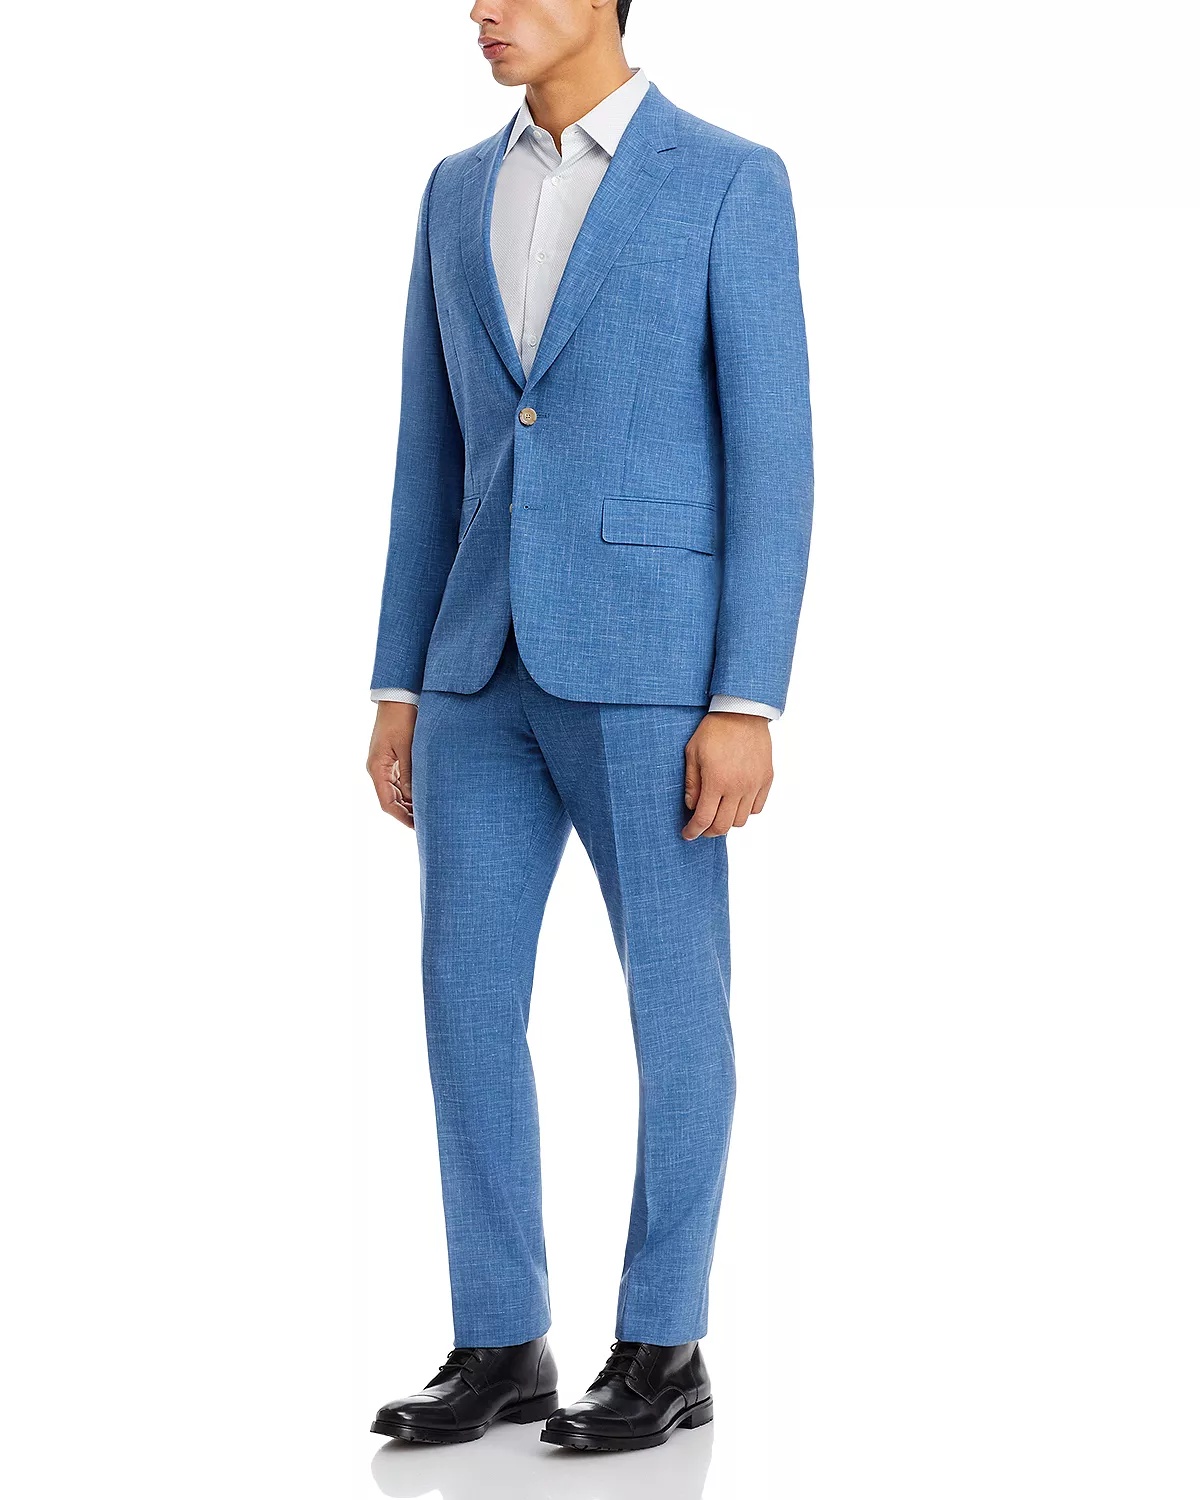 Soho Wool & Linen Slub Weave Extra Slim Fit Suit - 2